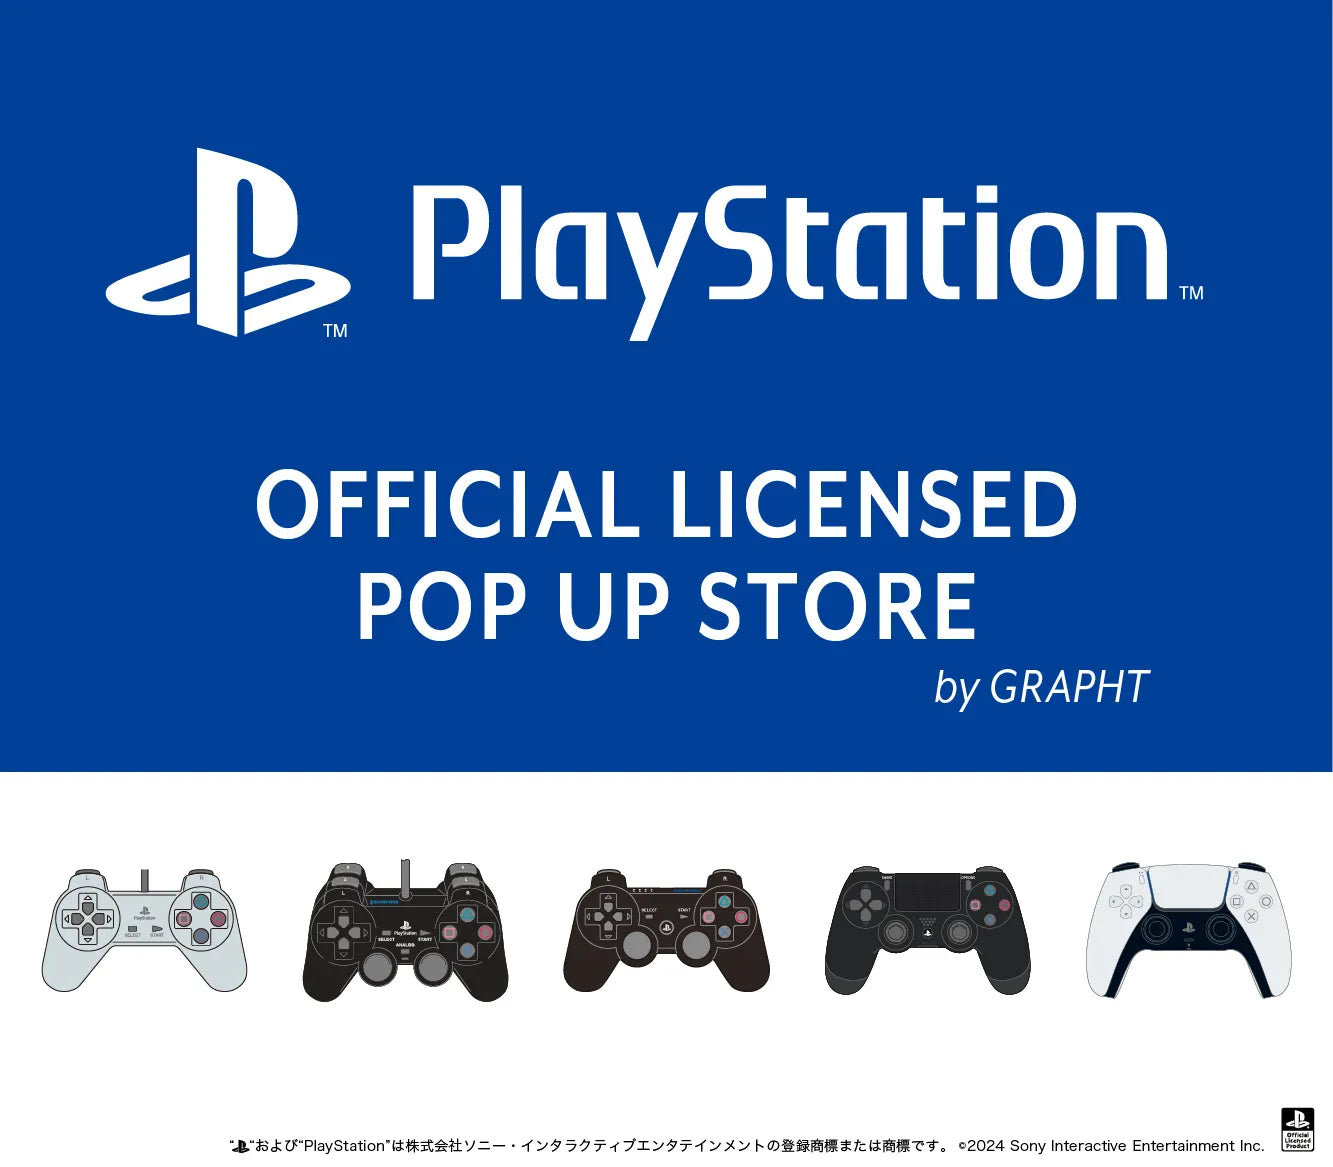 PlayStation™ POP UP STOREを3月20日(水/祝)よりR.O.U 各務原店（岐阜）にて開催！